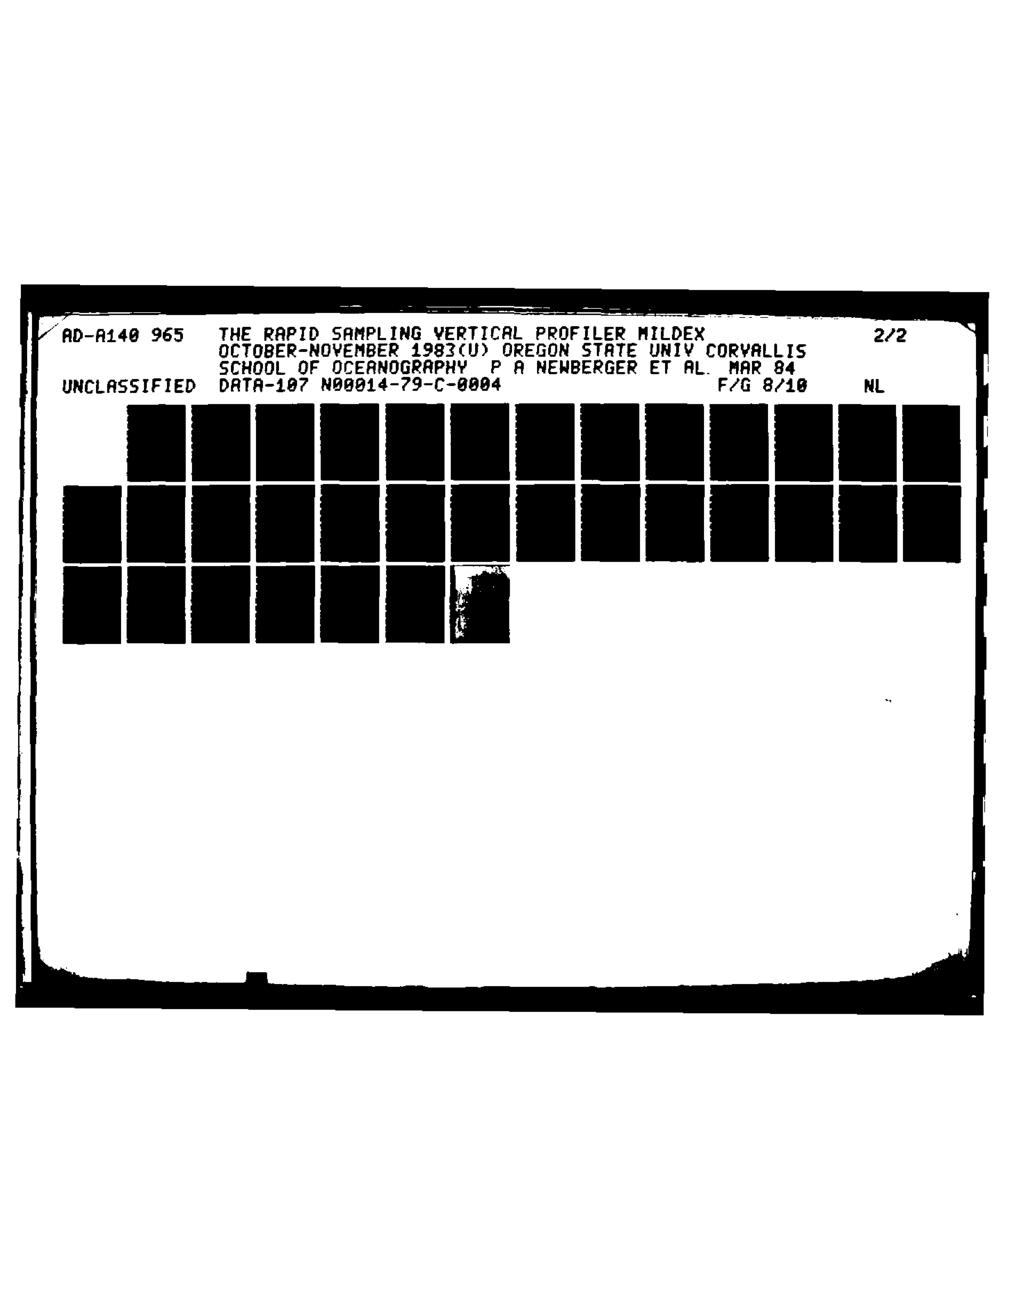 AD-fl14g 965 THE RRPID SAMPLING VERTICAL PROFILER MILDEX OCTOBER-NOVEMBER 1983(U) OREGON STATE UNIV CORVALLIS 2/2 SCHOOL OF